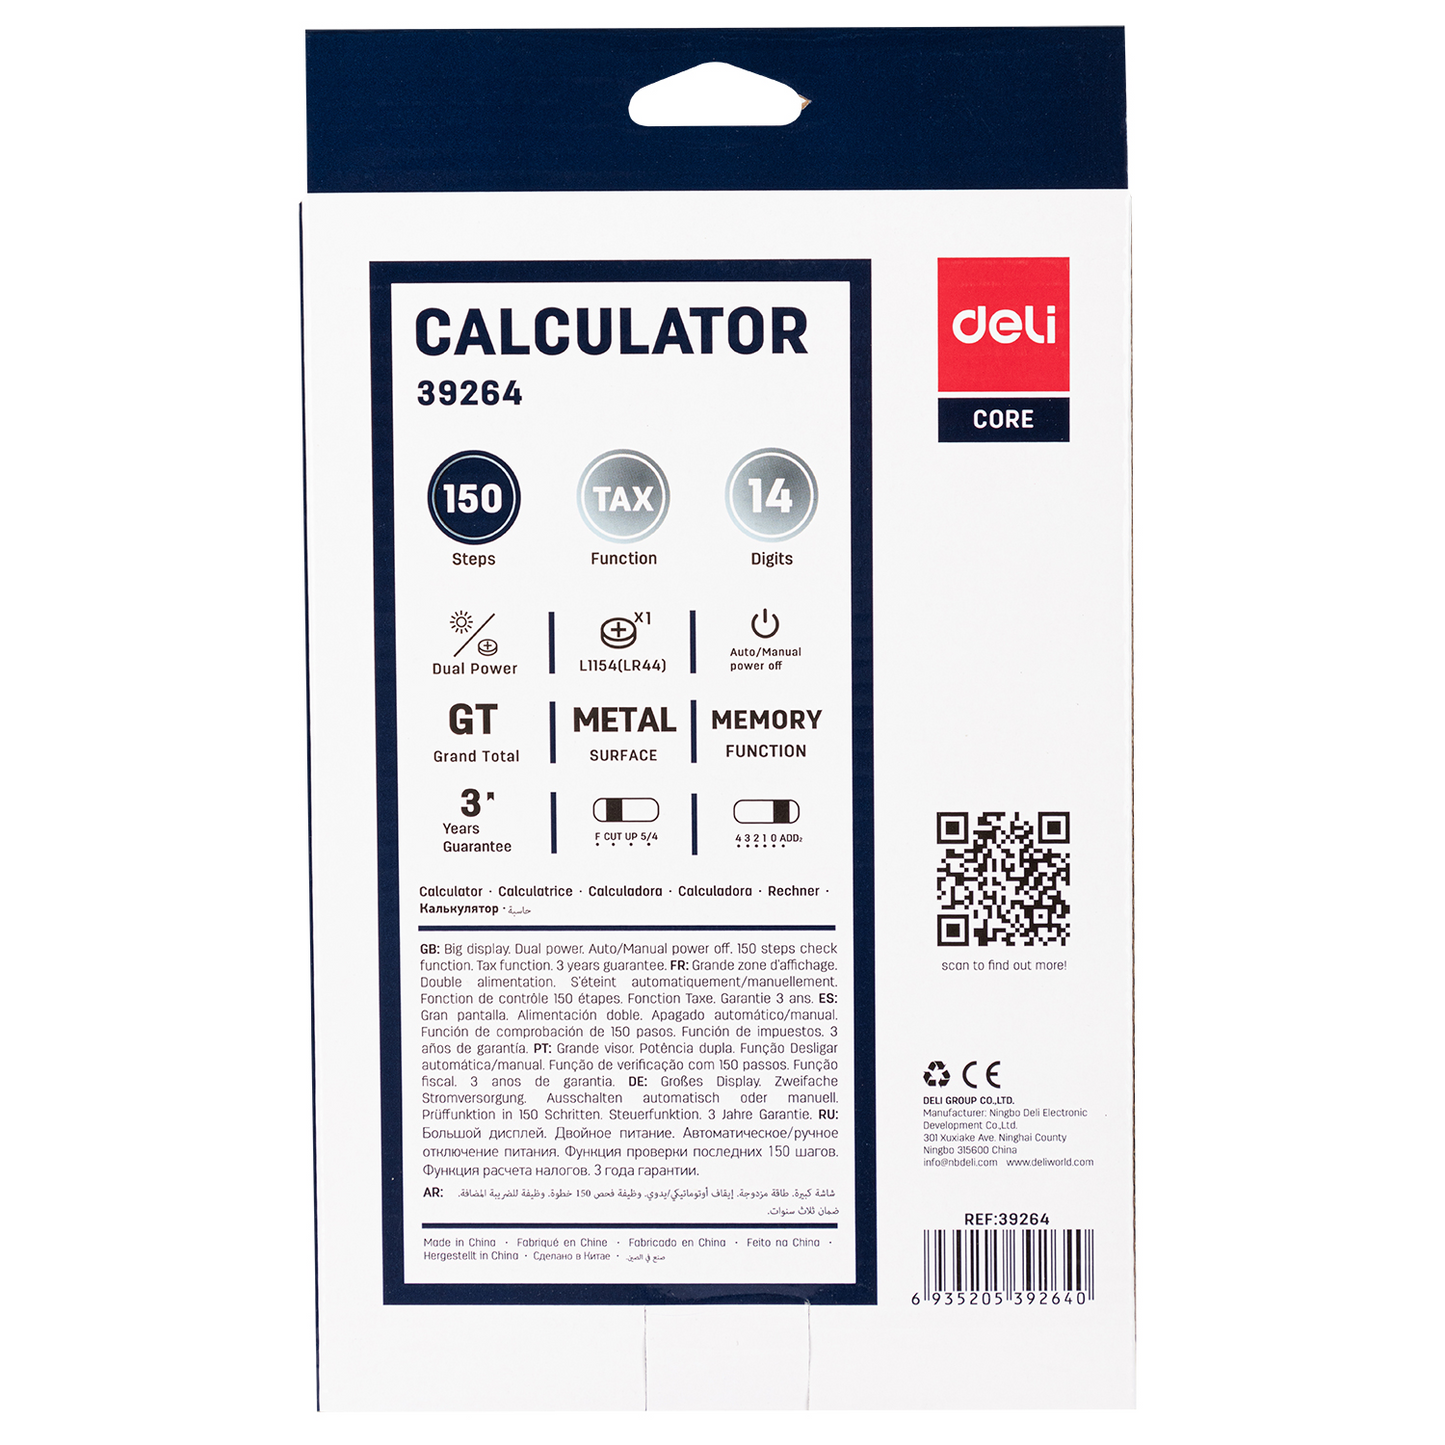 Deli Calculator 39264 || الة حاسبة ديلي ١٤ رقم